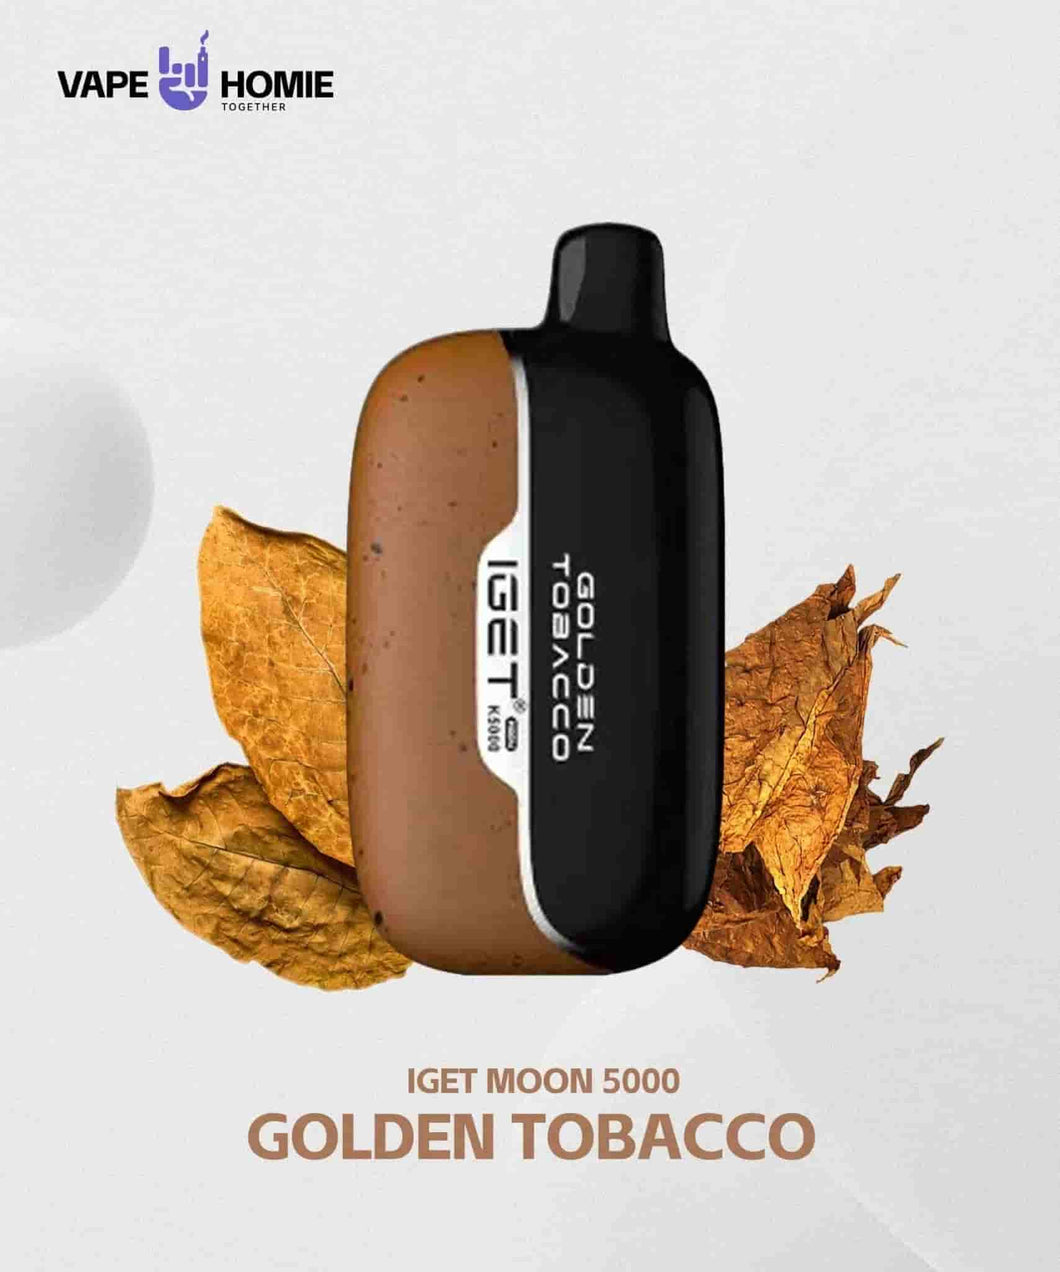 IGET MOON K5000 - Golden Tobacco